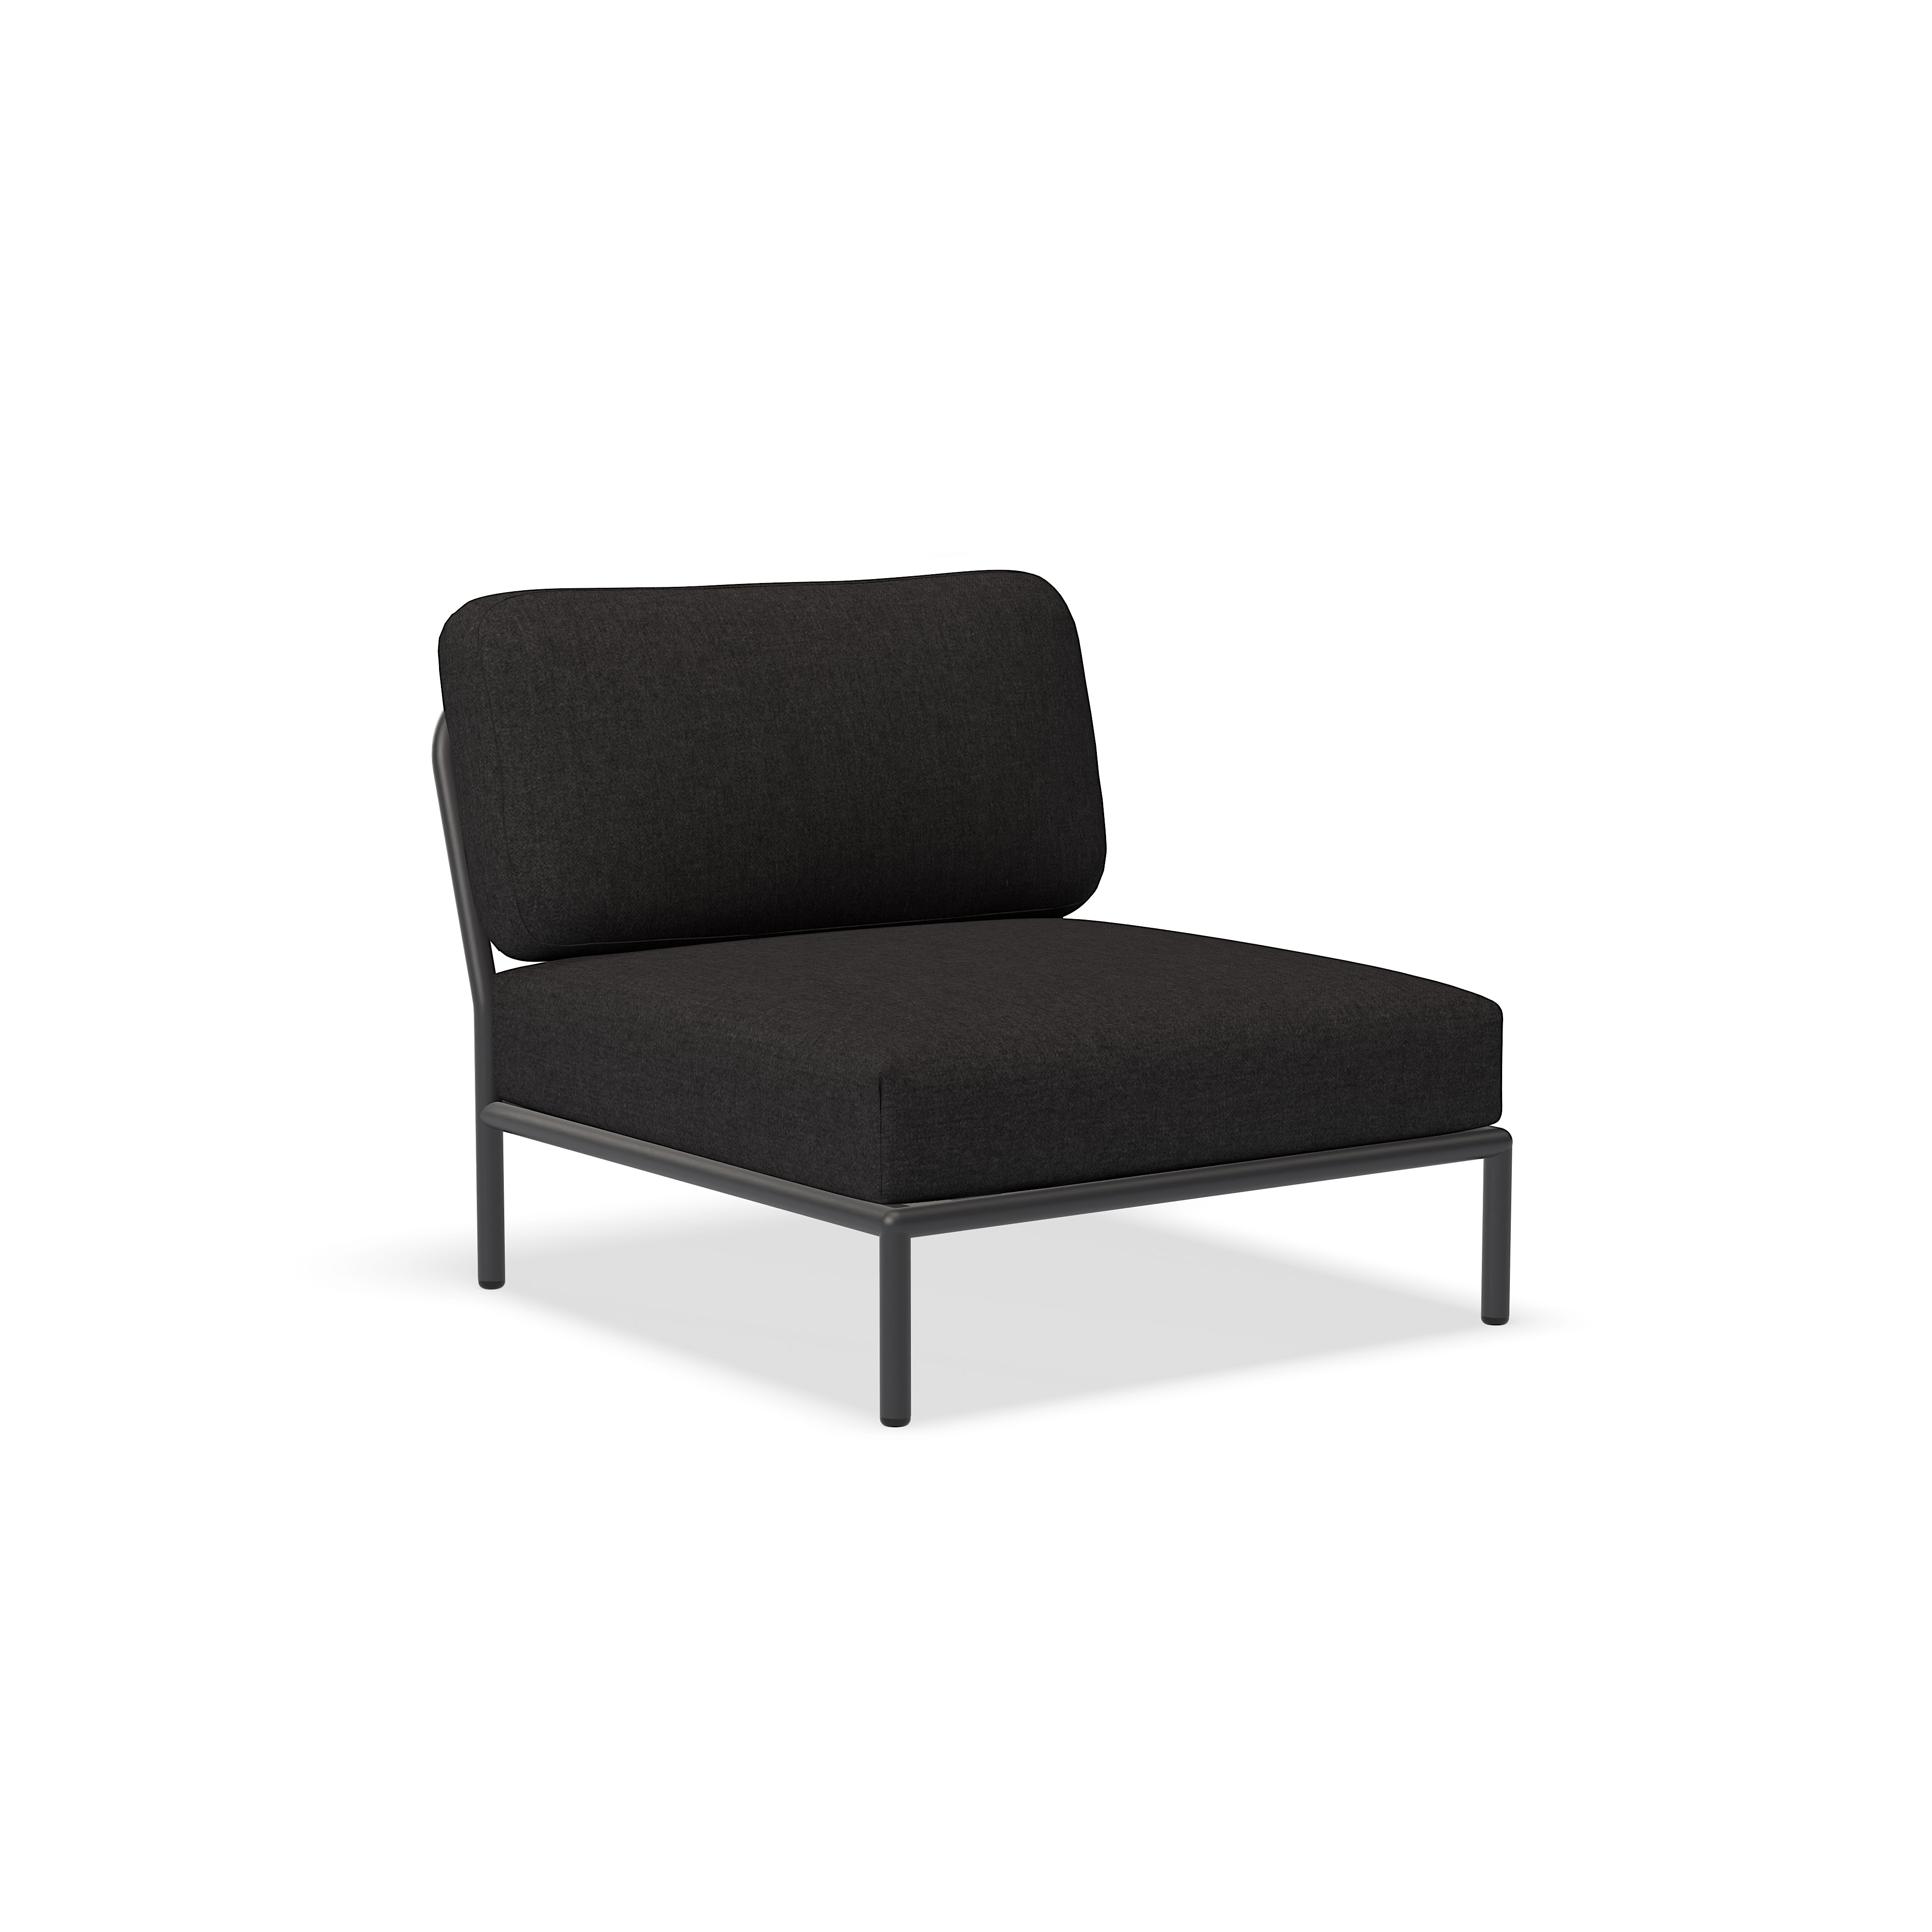 الكرسي - 12205-5751 - كرسي ، رمادي سخامي (NATTÉ) ، هيكل رمادي غامق